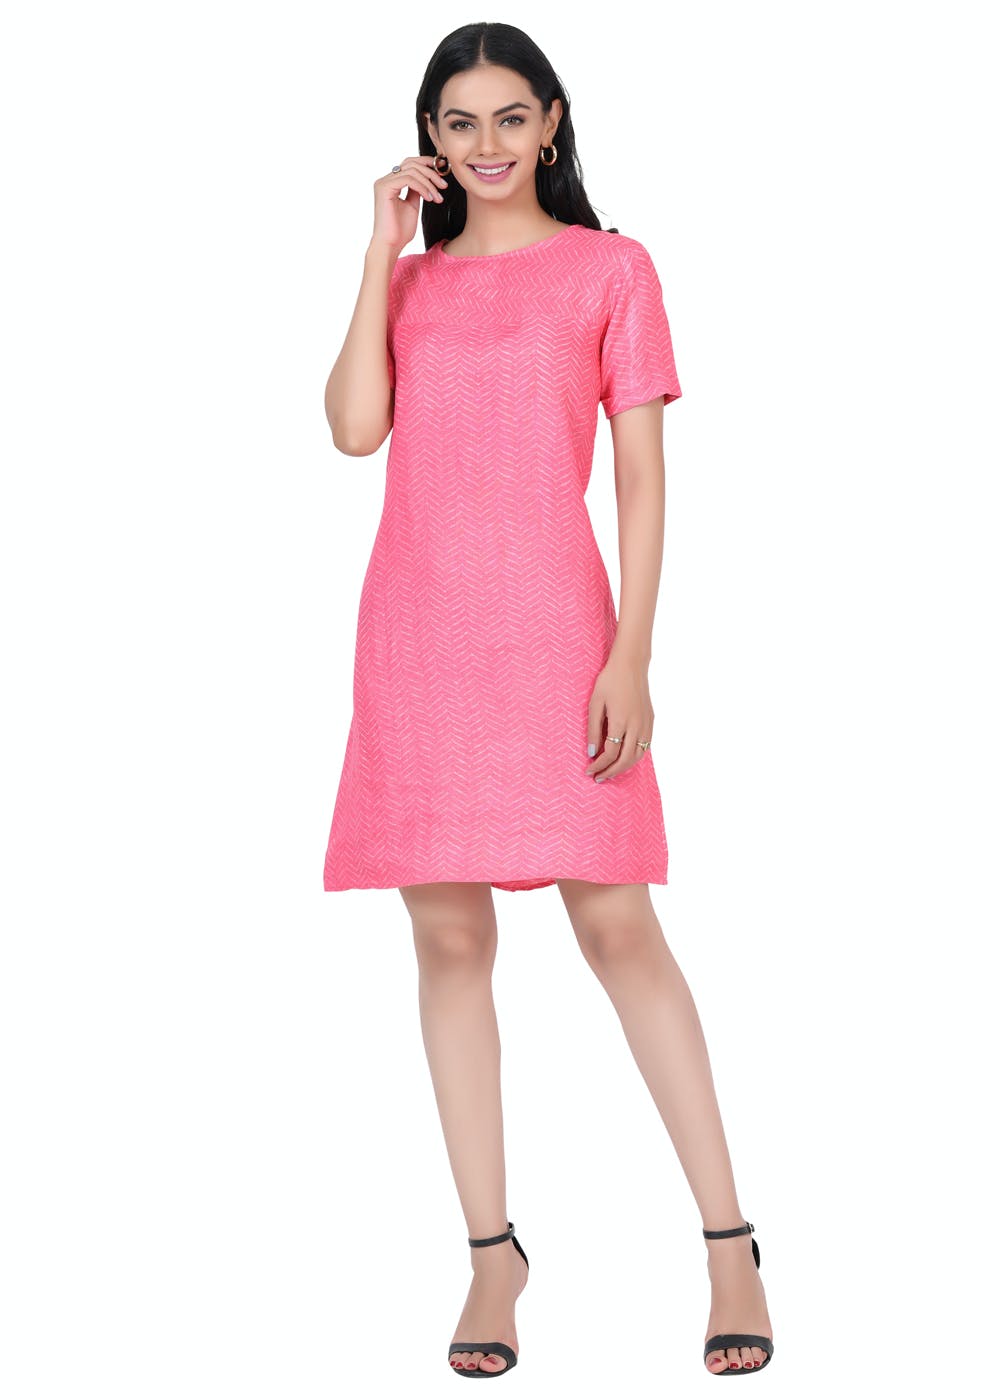 Contrast Zig Zag Line Detail Pink A-Line Dress